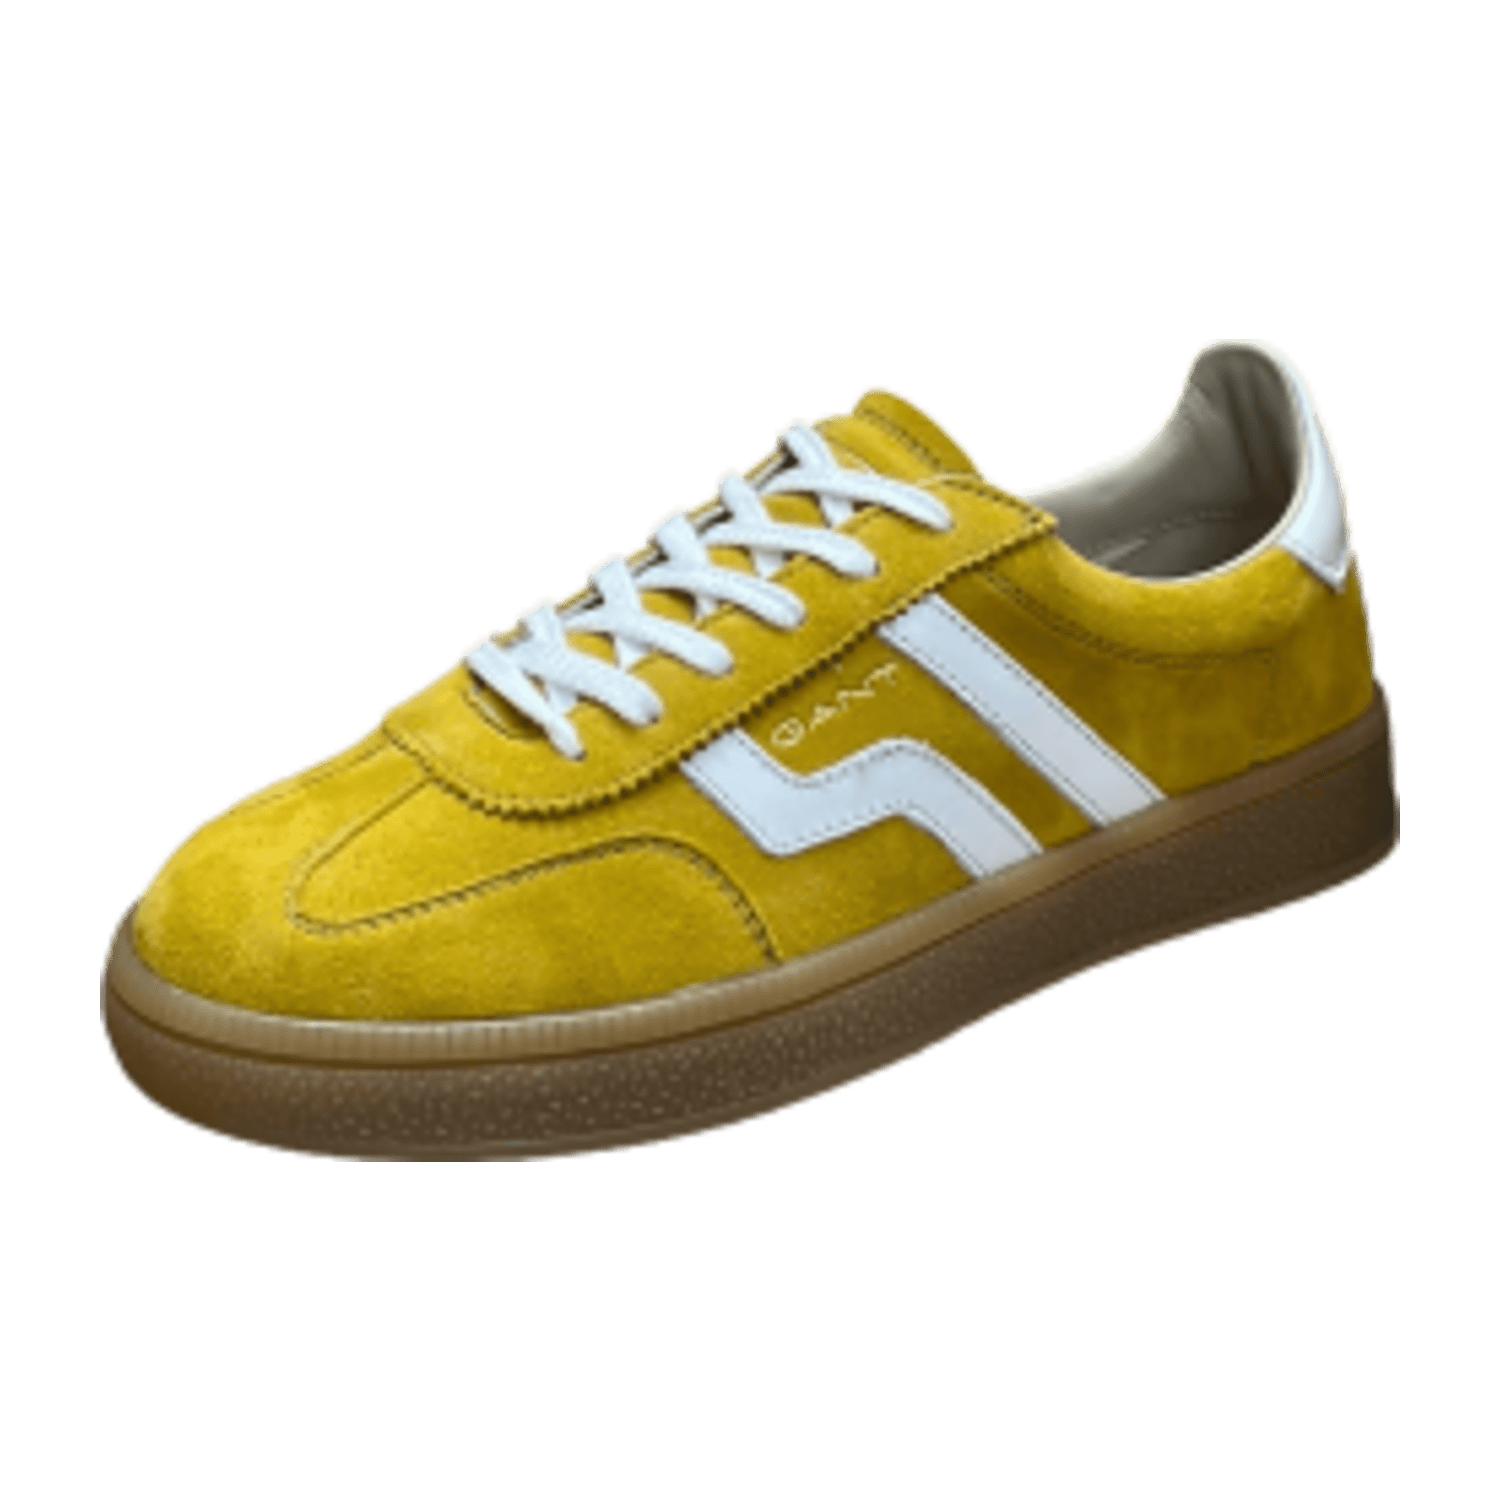 Gant Cuzima Sneaker yellow